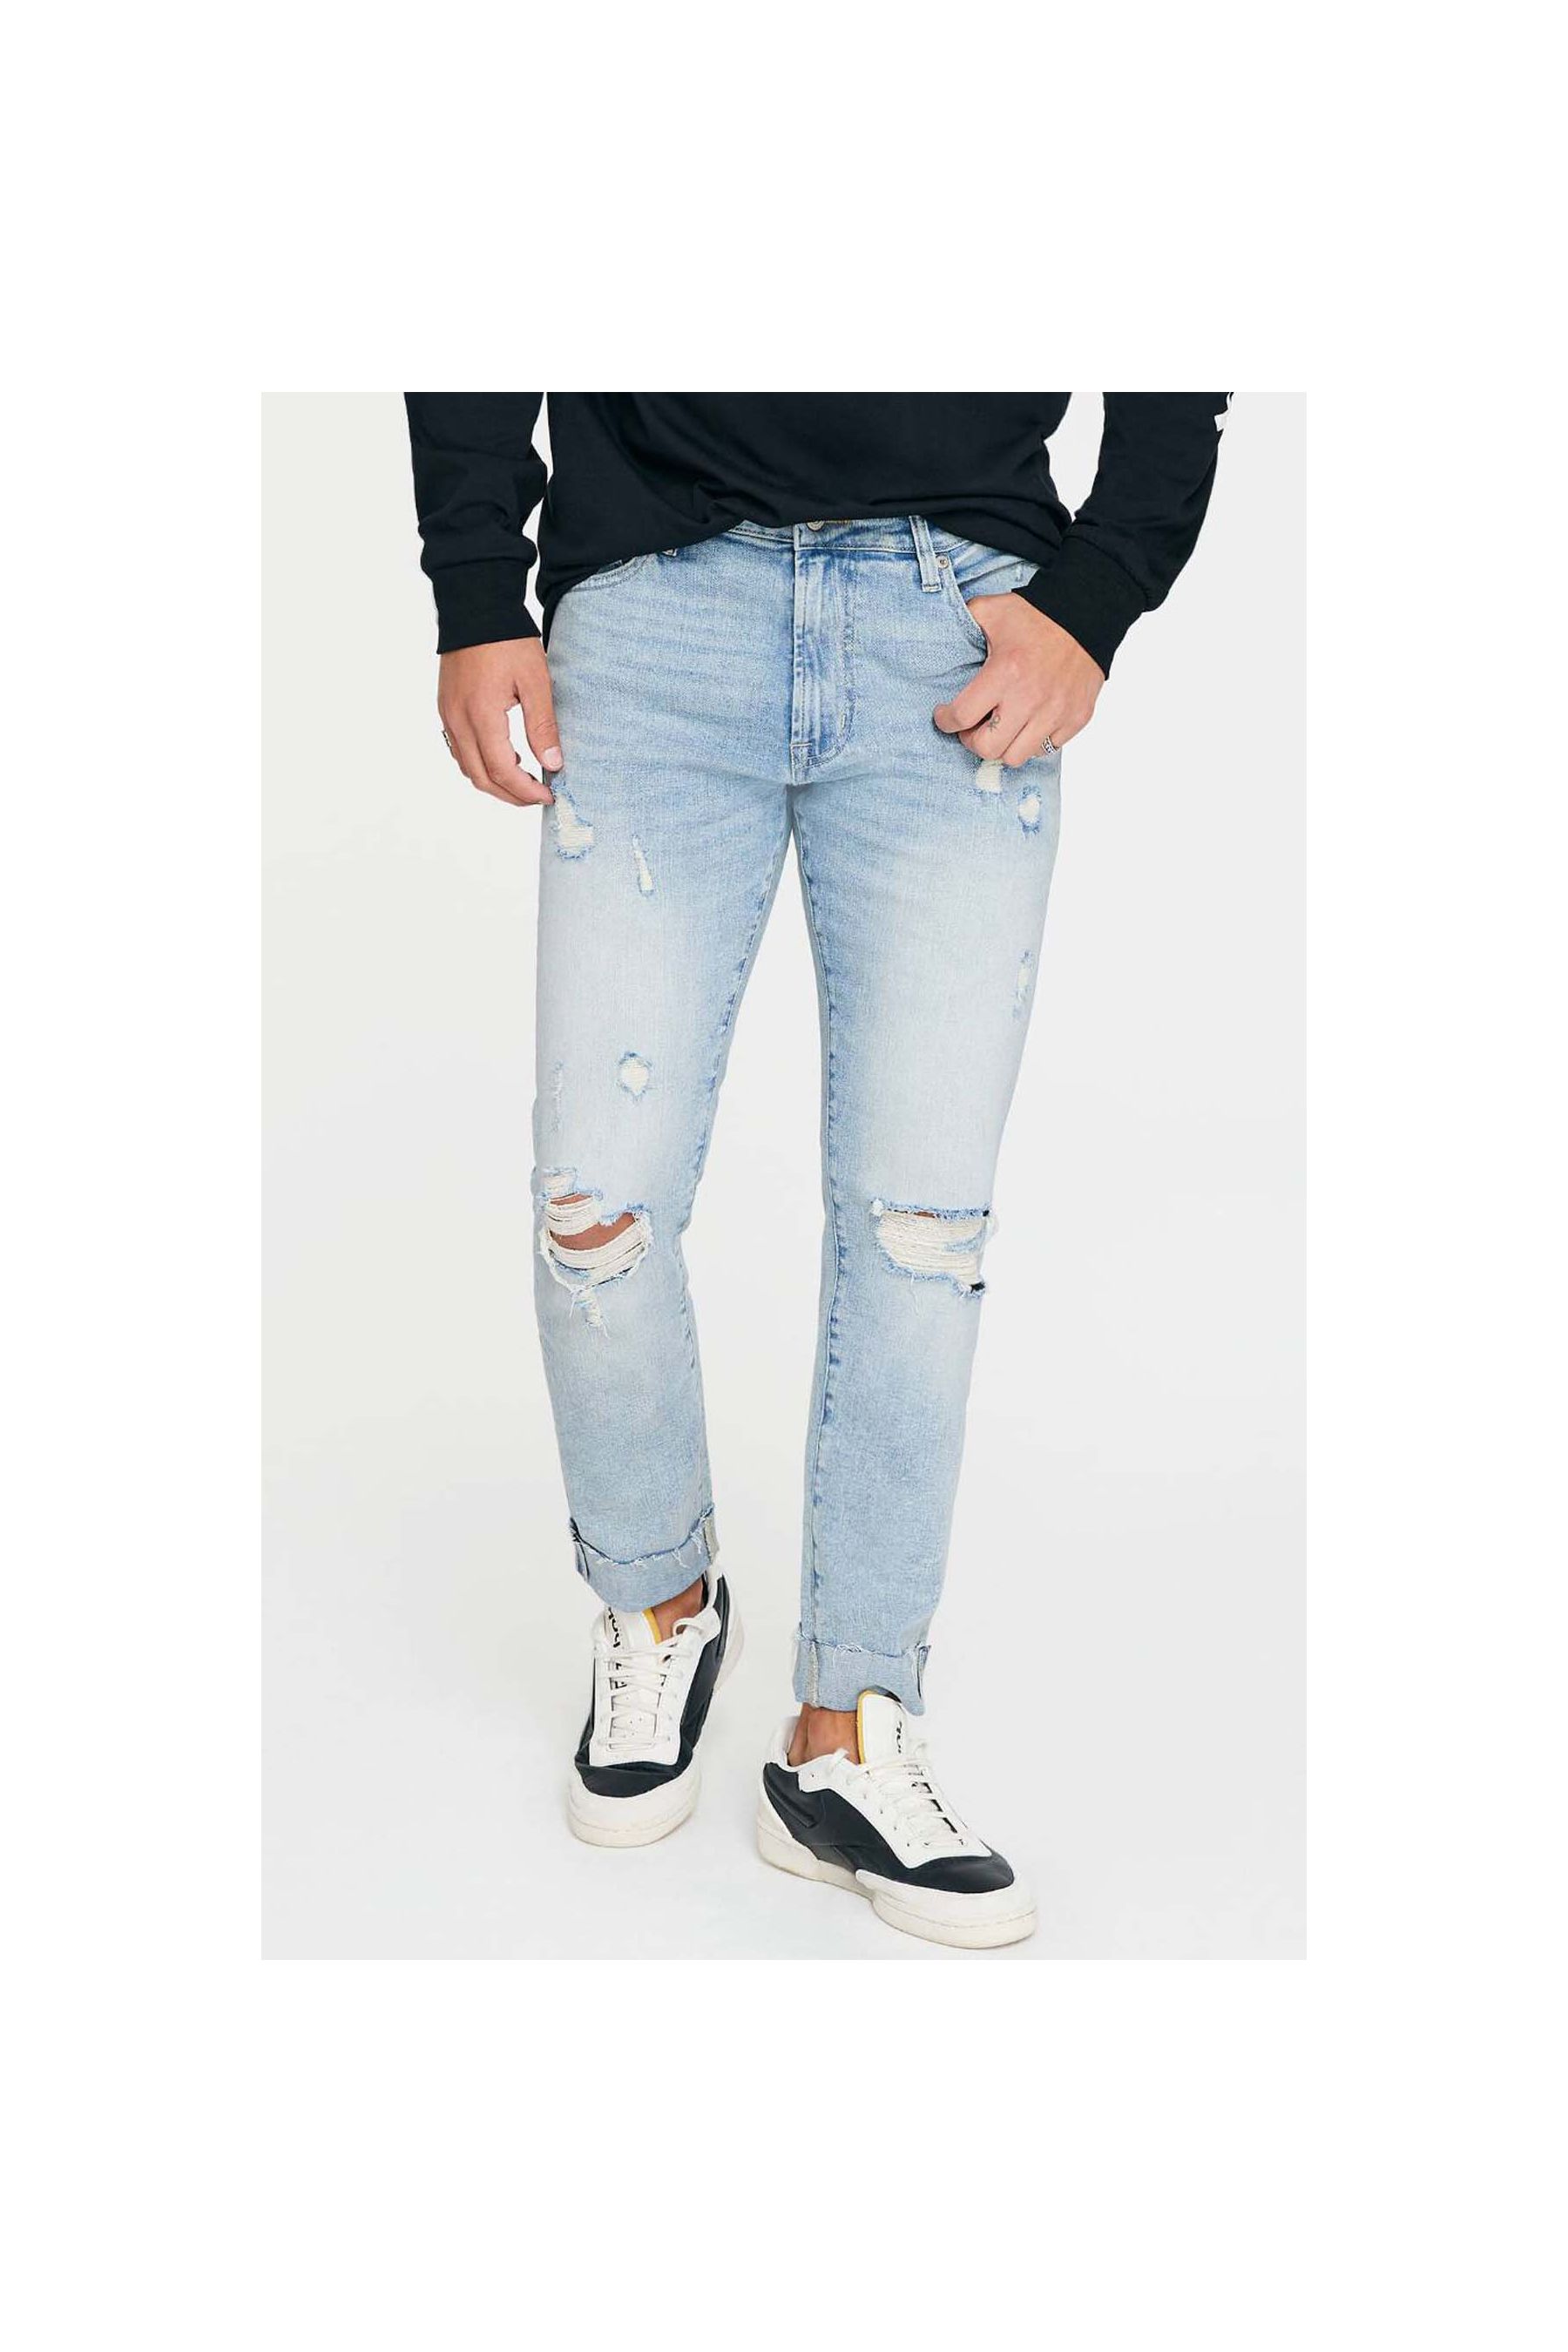 AEROPOSTALE Athletic Skinny Premium Air Jean Light Wash Men Jeans